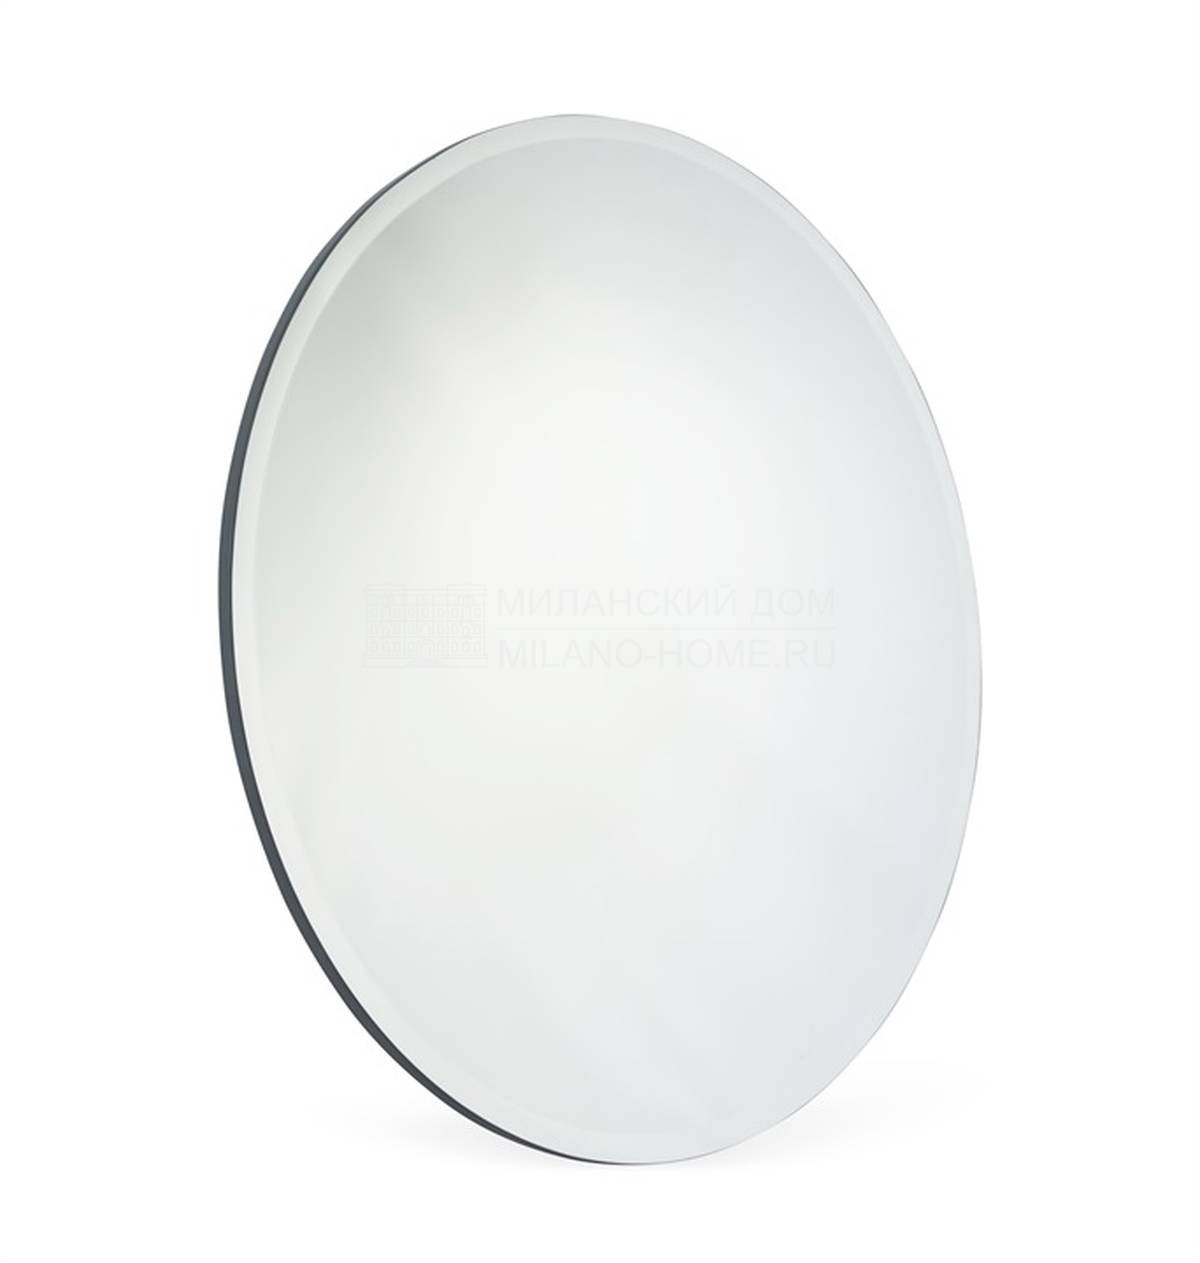 Зеркало настенное Olivia mirror из Великобритании фабрики THE SOFA & CHAIR Company